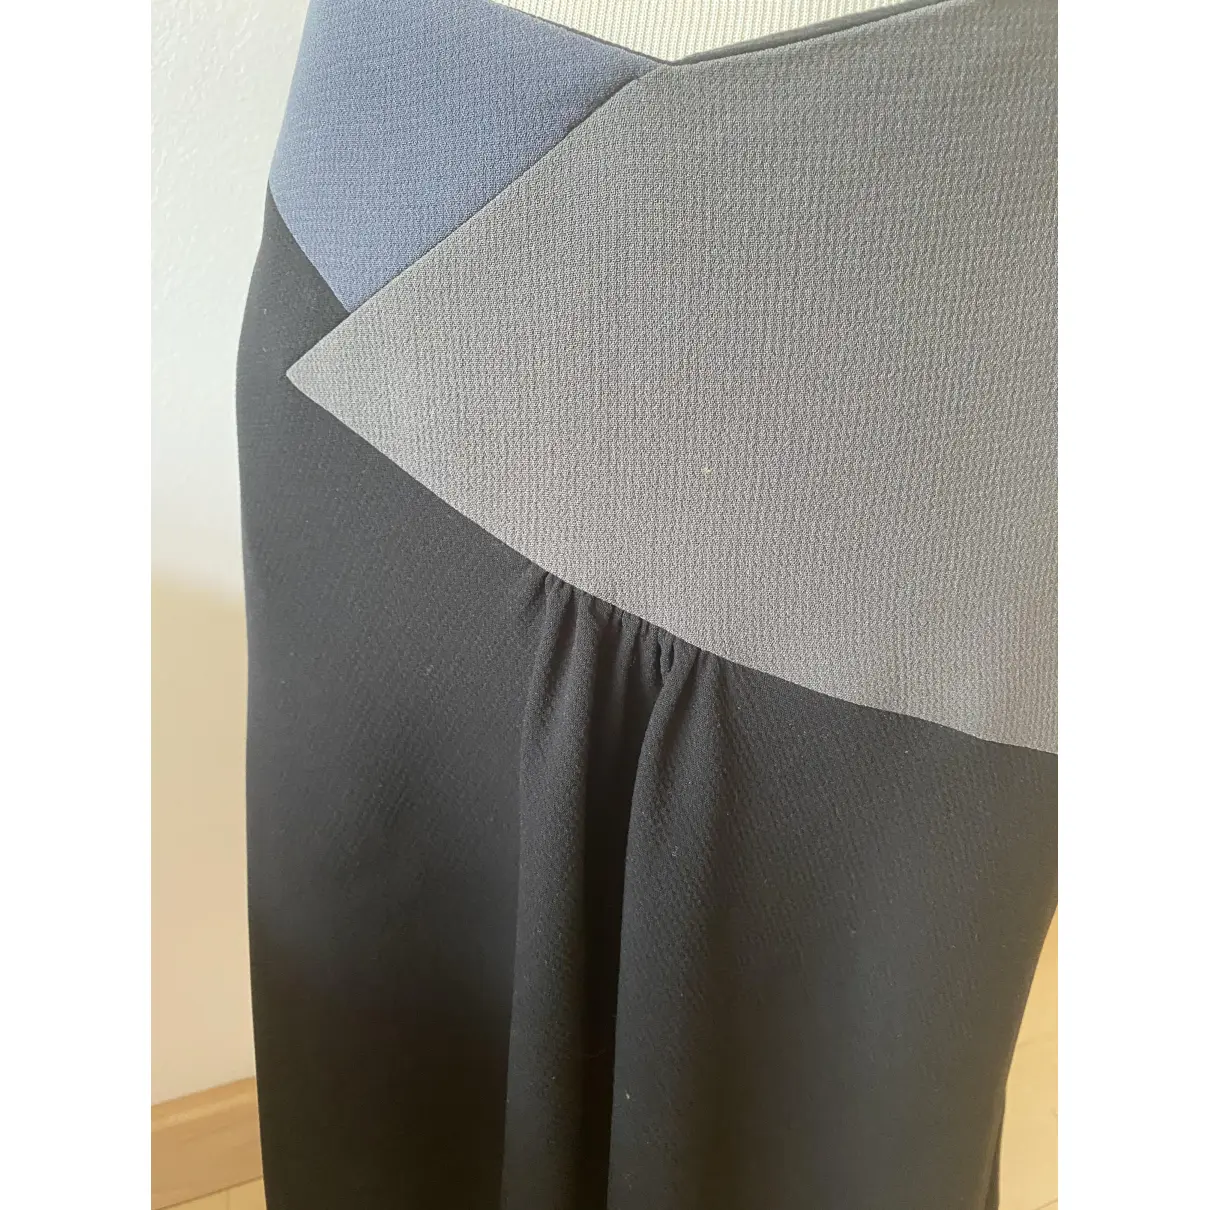 Buy Emporio Armani Mid-length skirt online